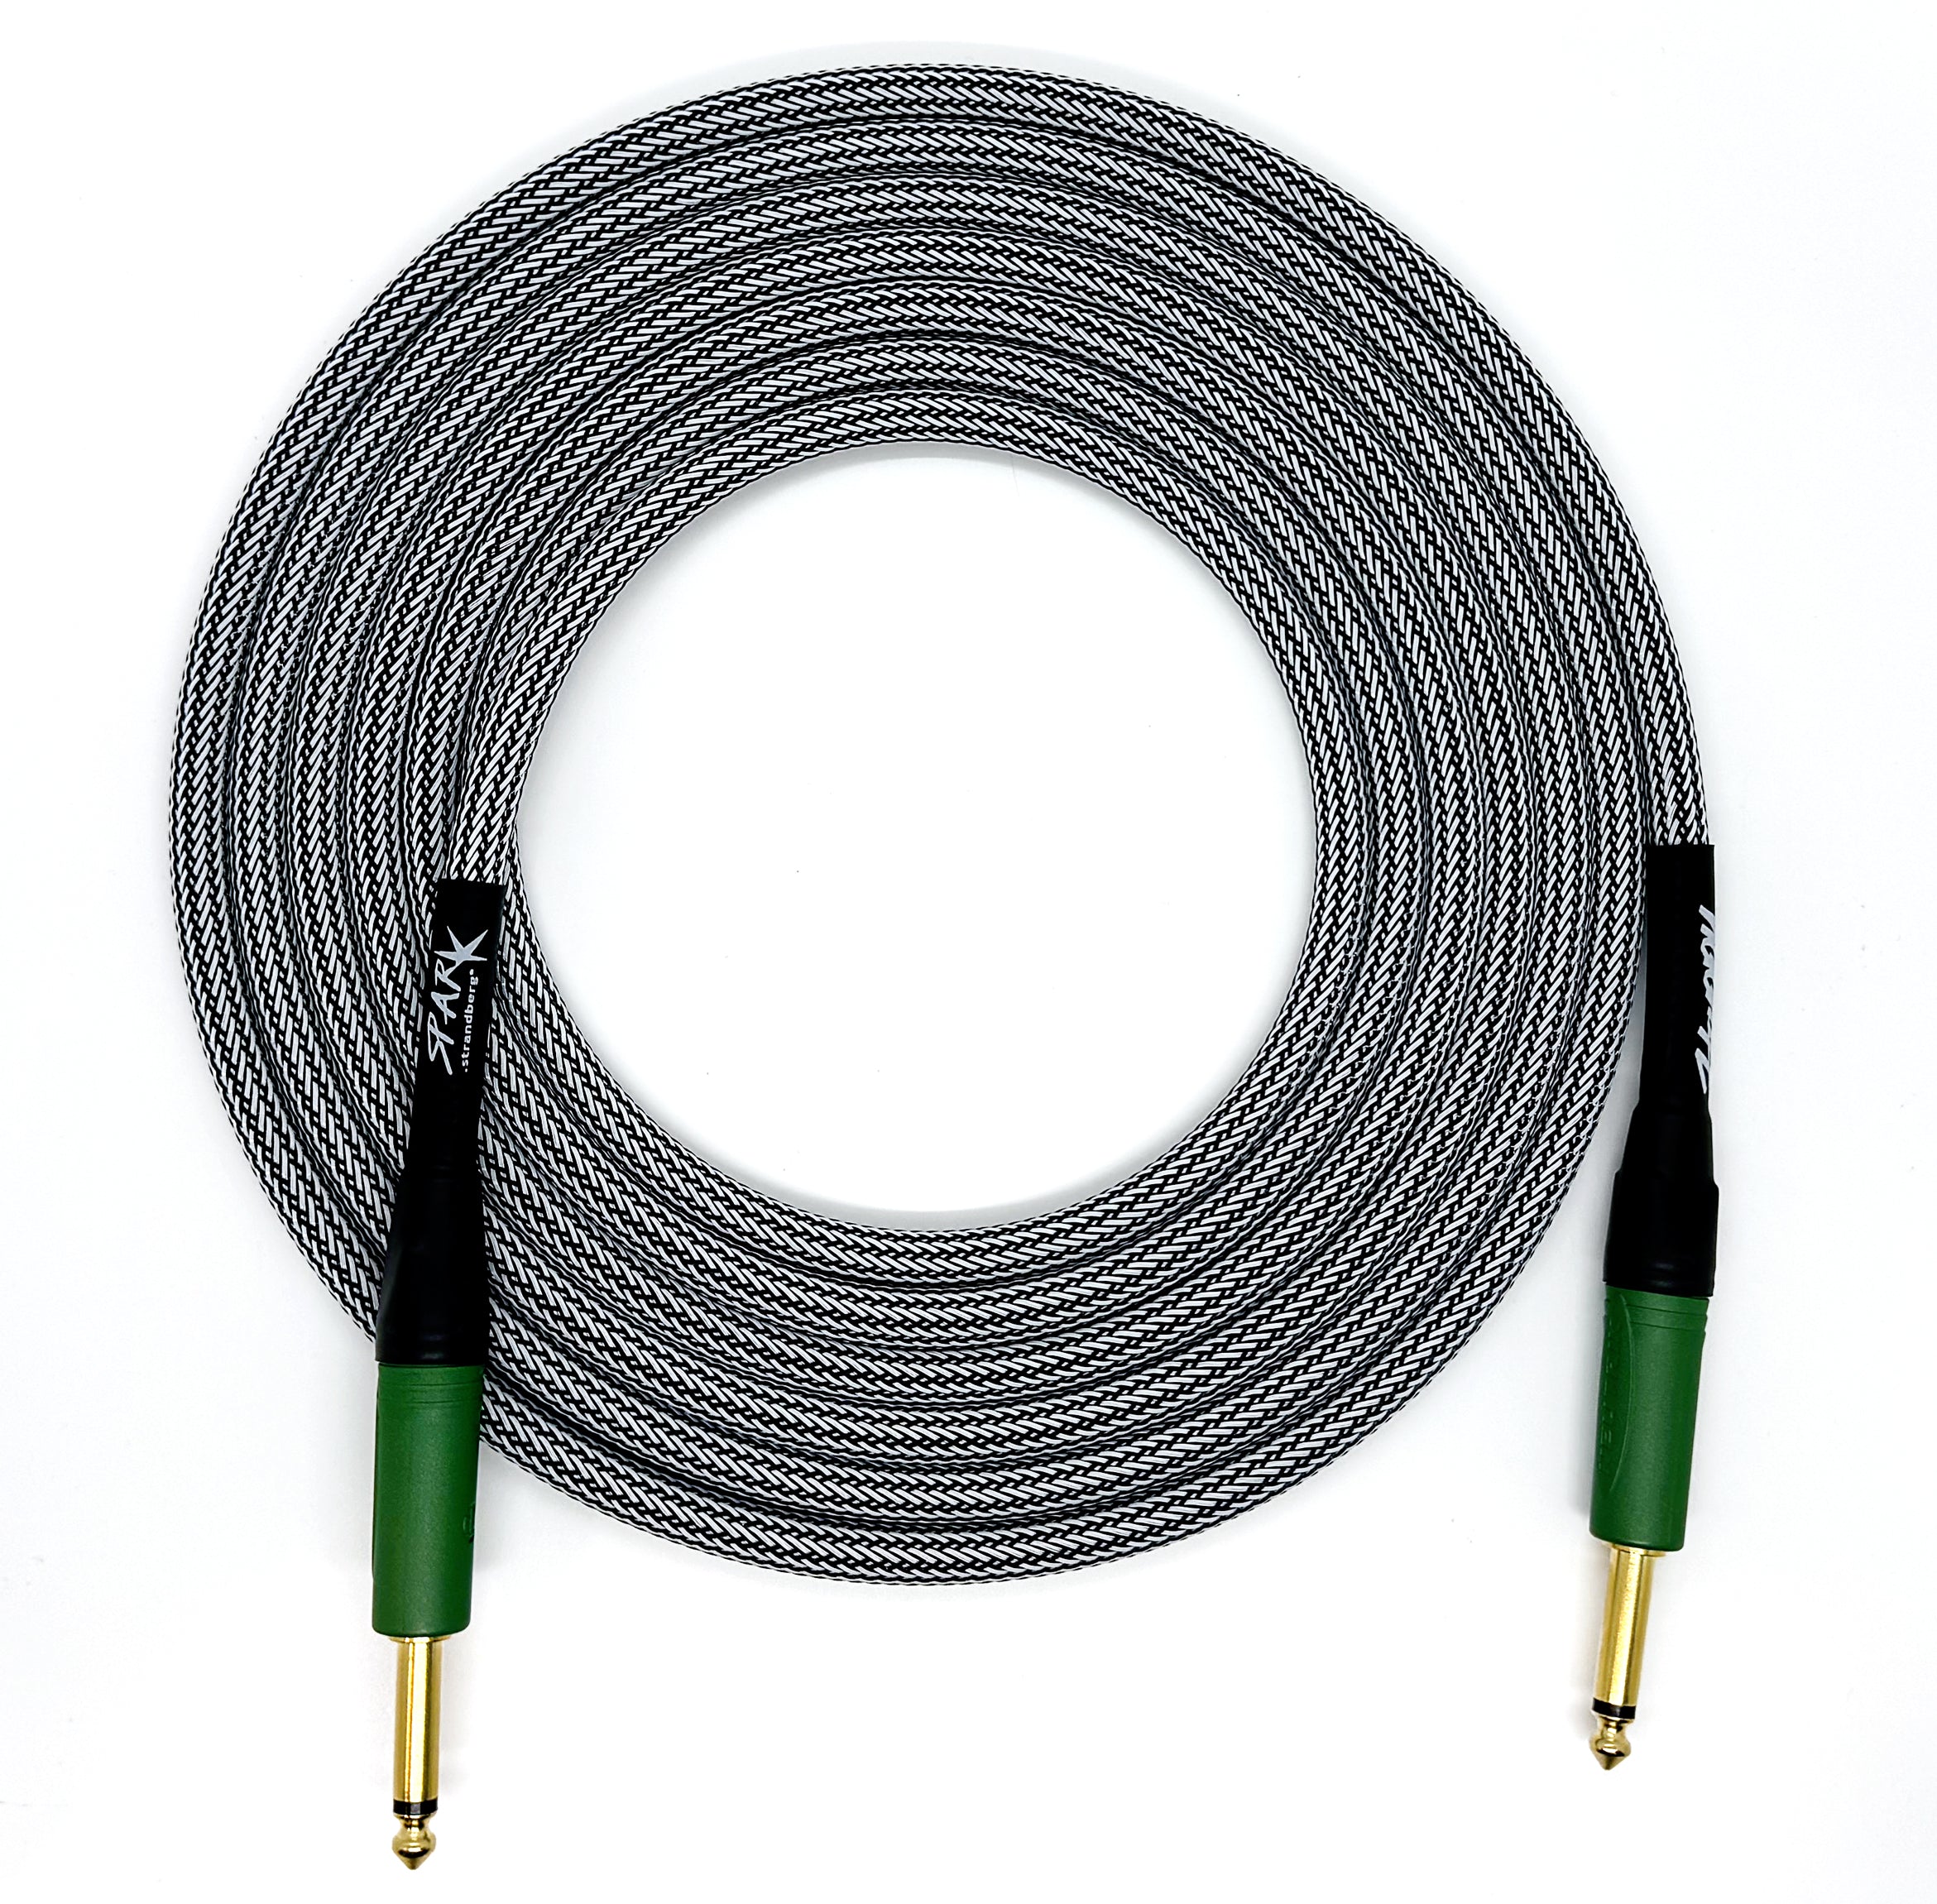 Strandberg Spark Ceramic Colorshield Instrument Cable - Black/White w/ Green